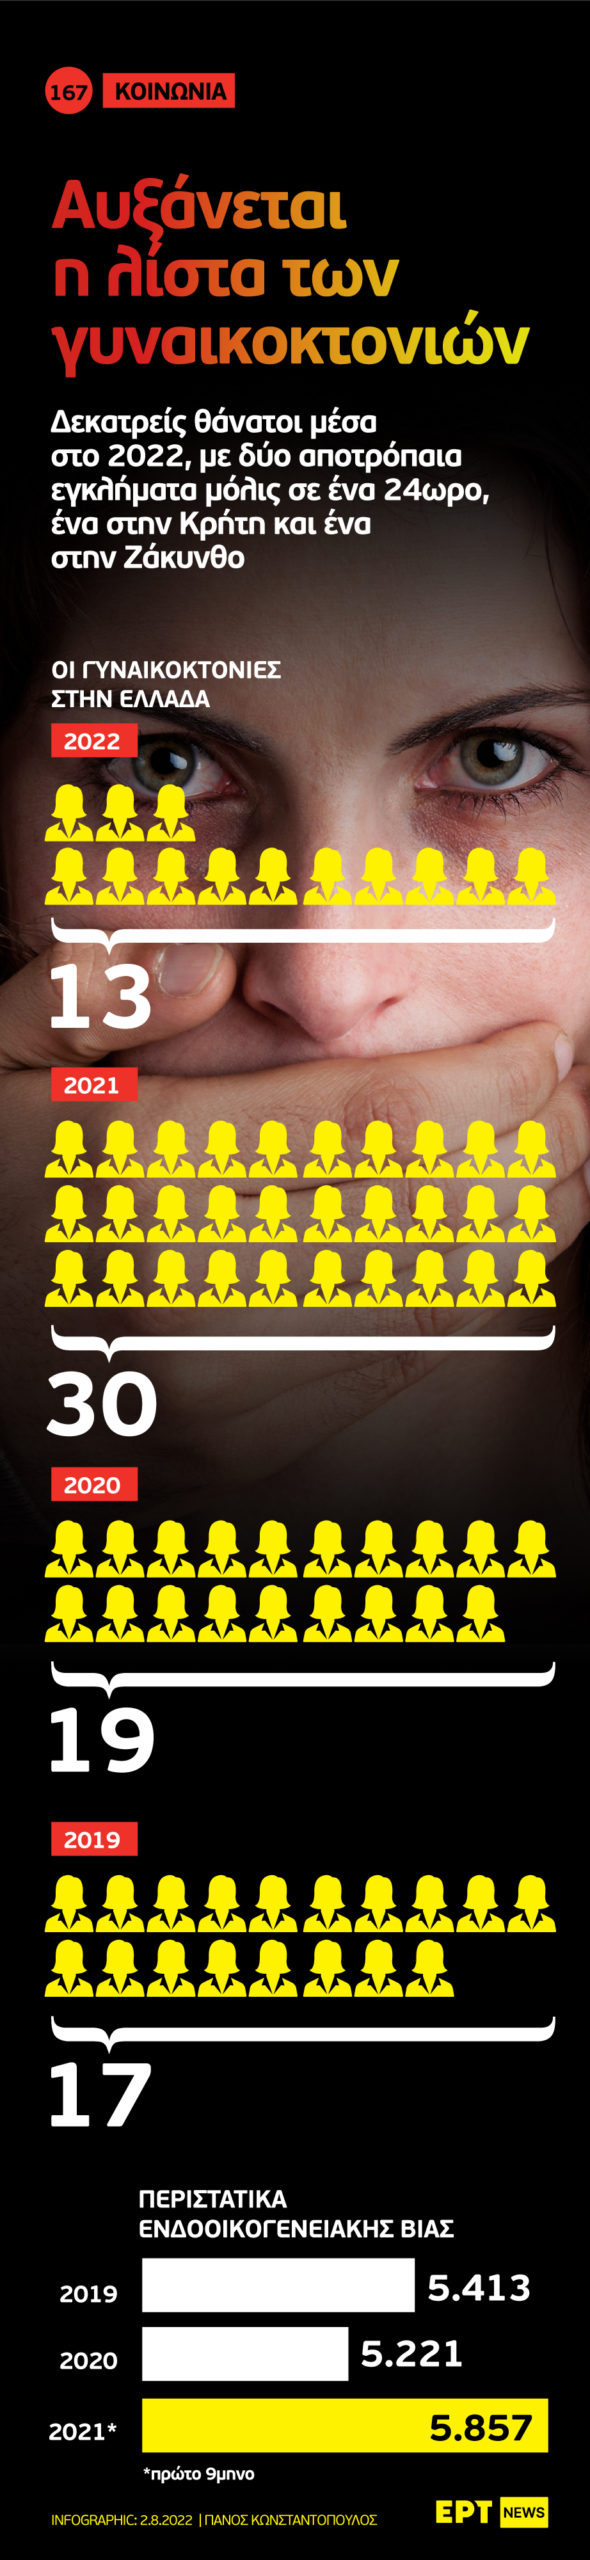 Infographic: Αυξάνεται η λίστα των γυναικοκτονιών